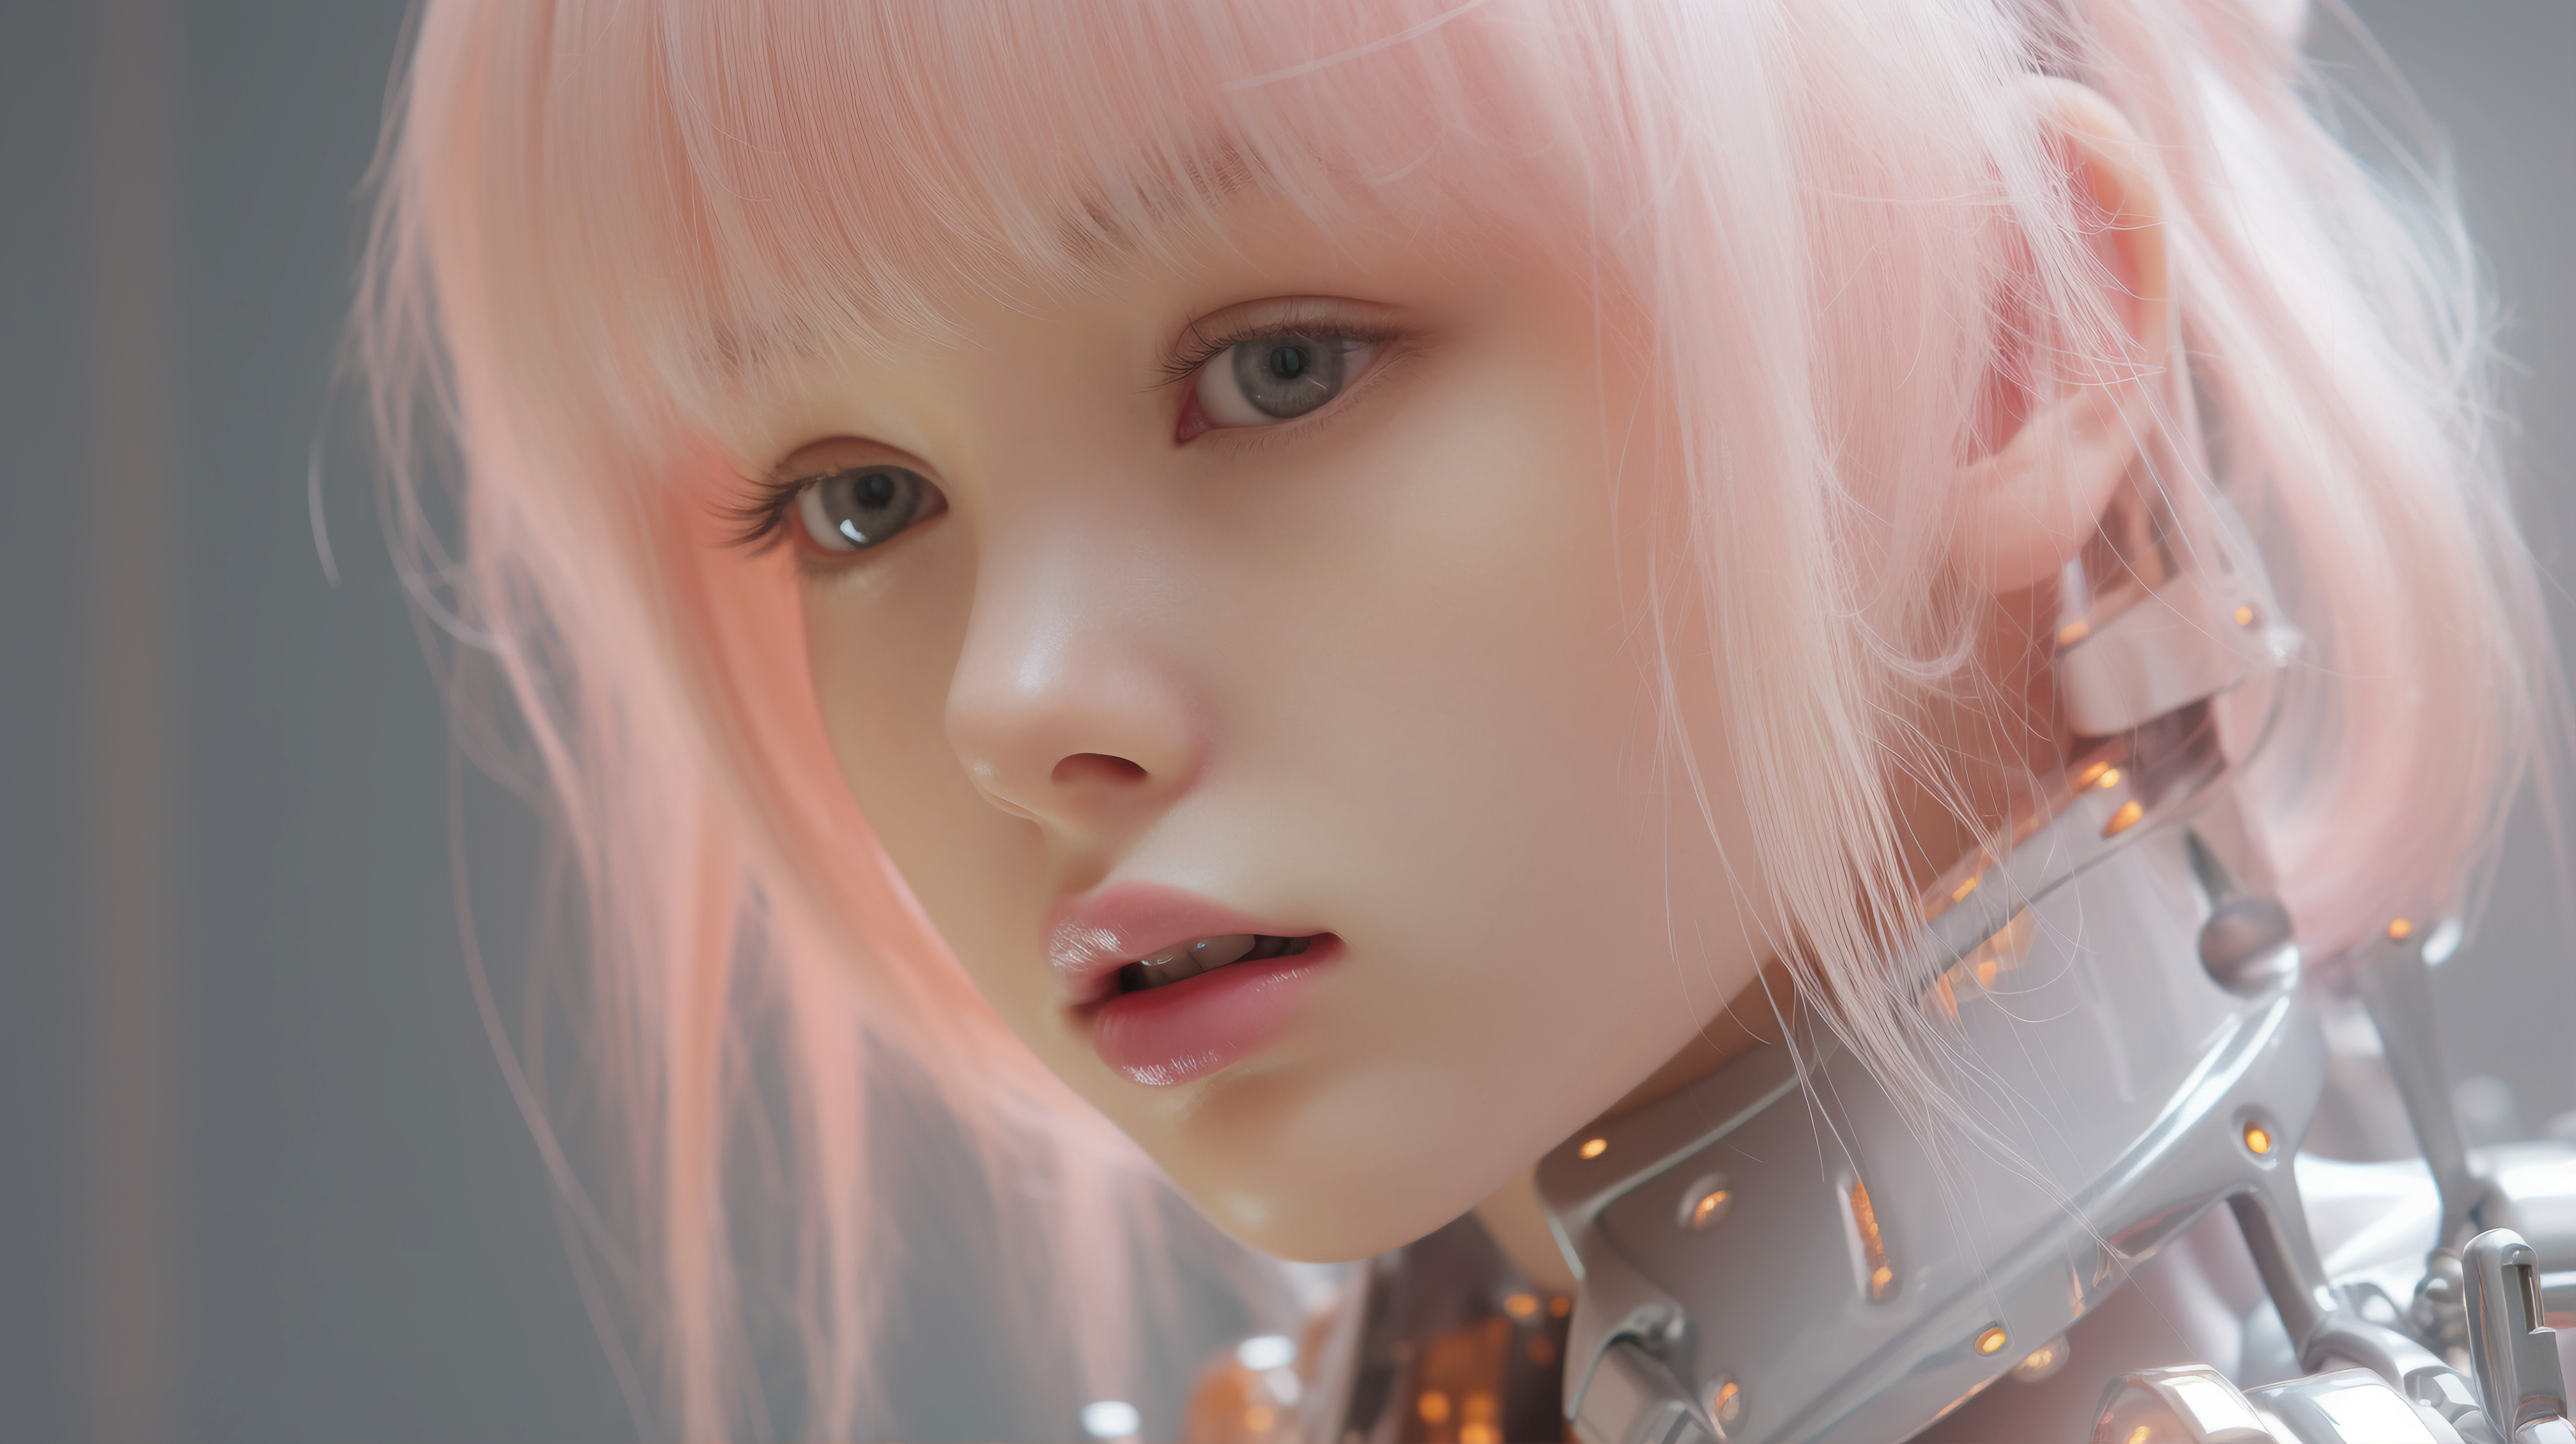 Ai Digital Art Women Pink Hair Blue Eyes Closeup Face 5824x3264